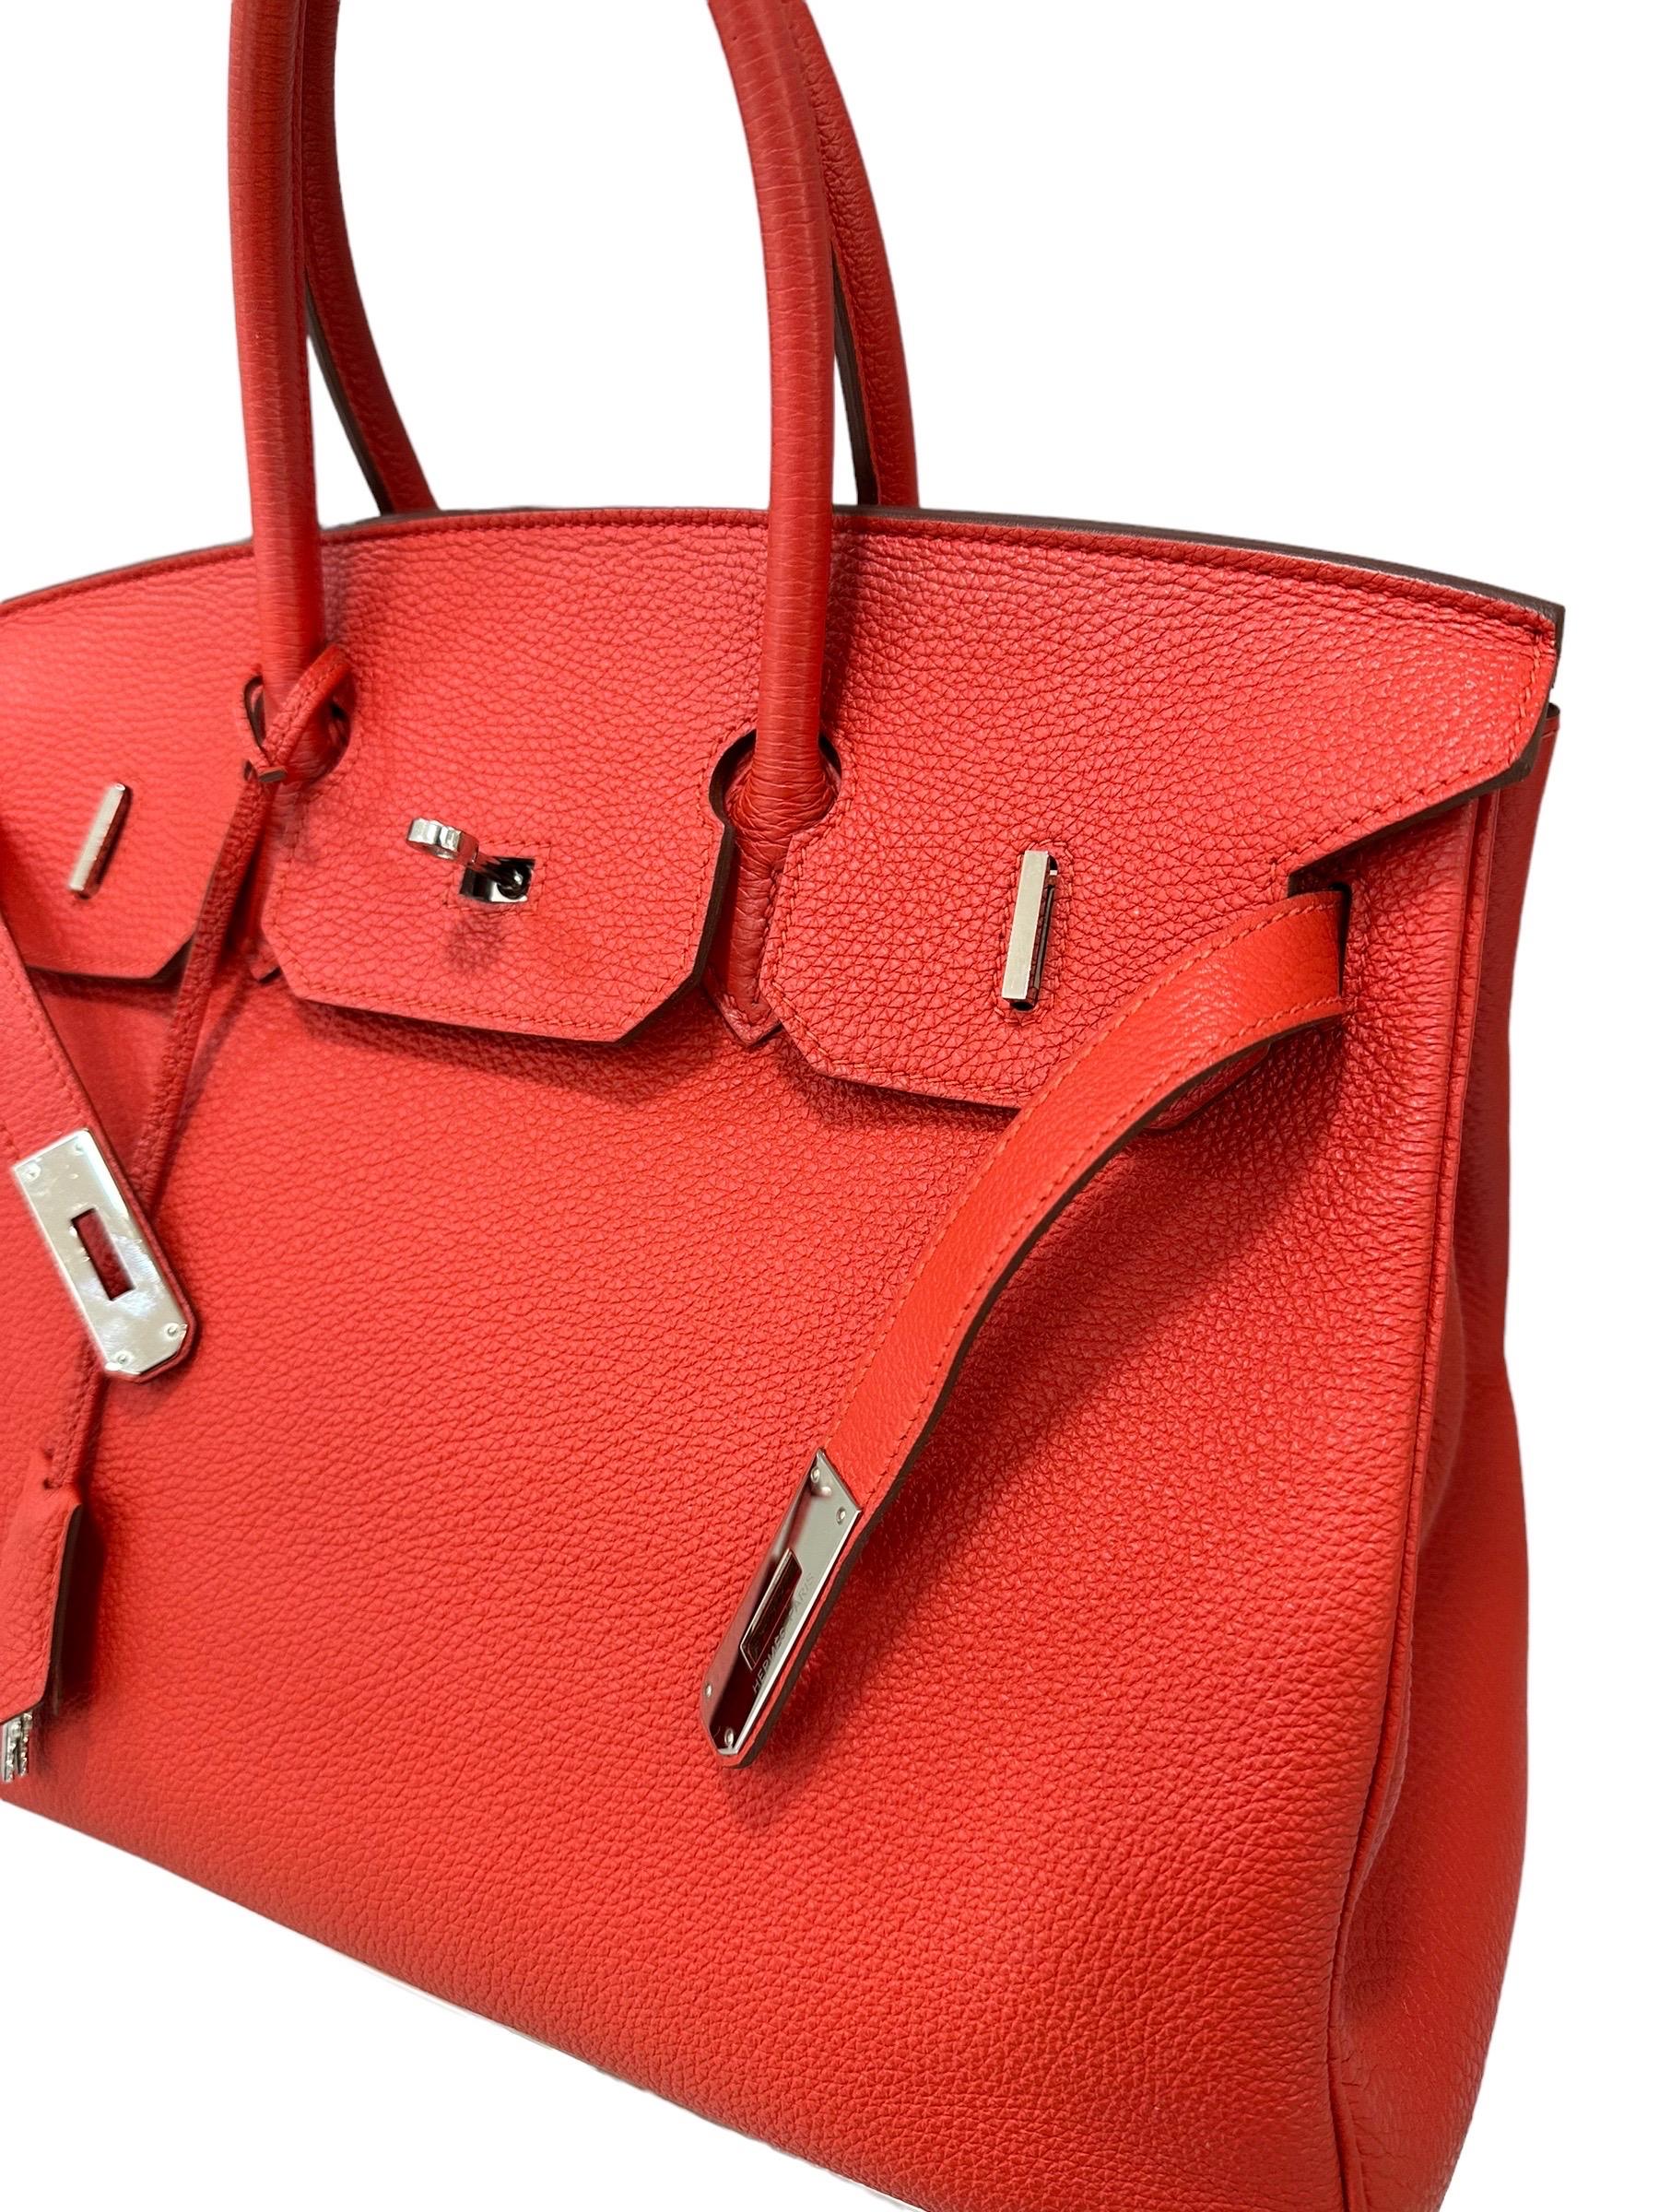 Women's 2011 Hermès Birkin 35 Togo Leather Rouge Capucine Top Handle Bag For Sale